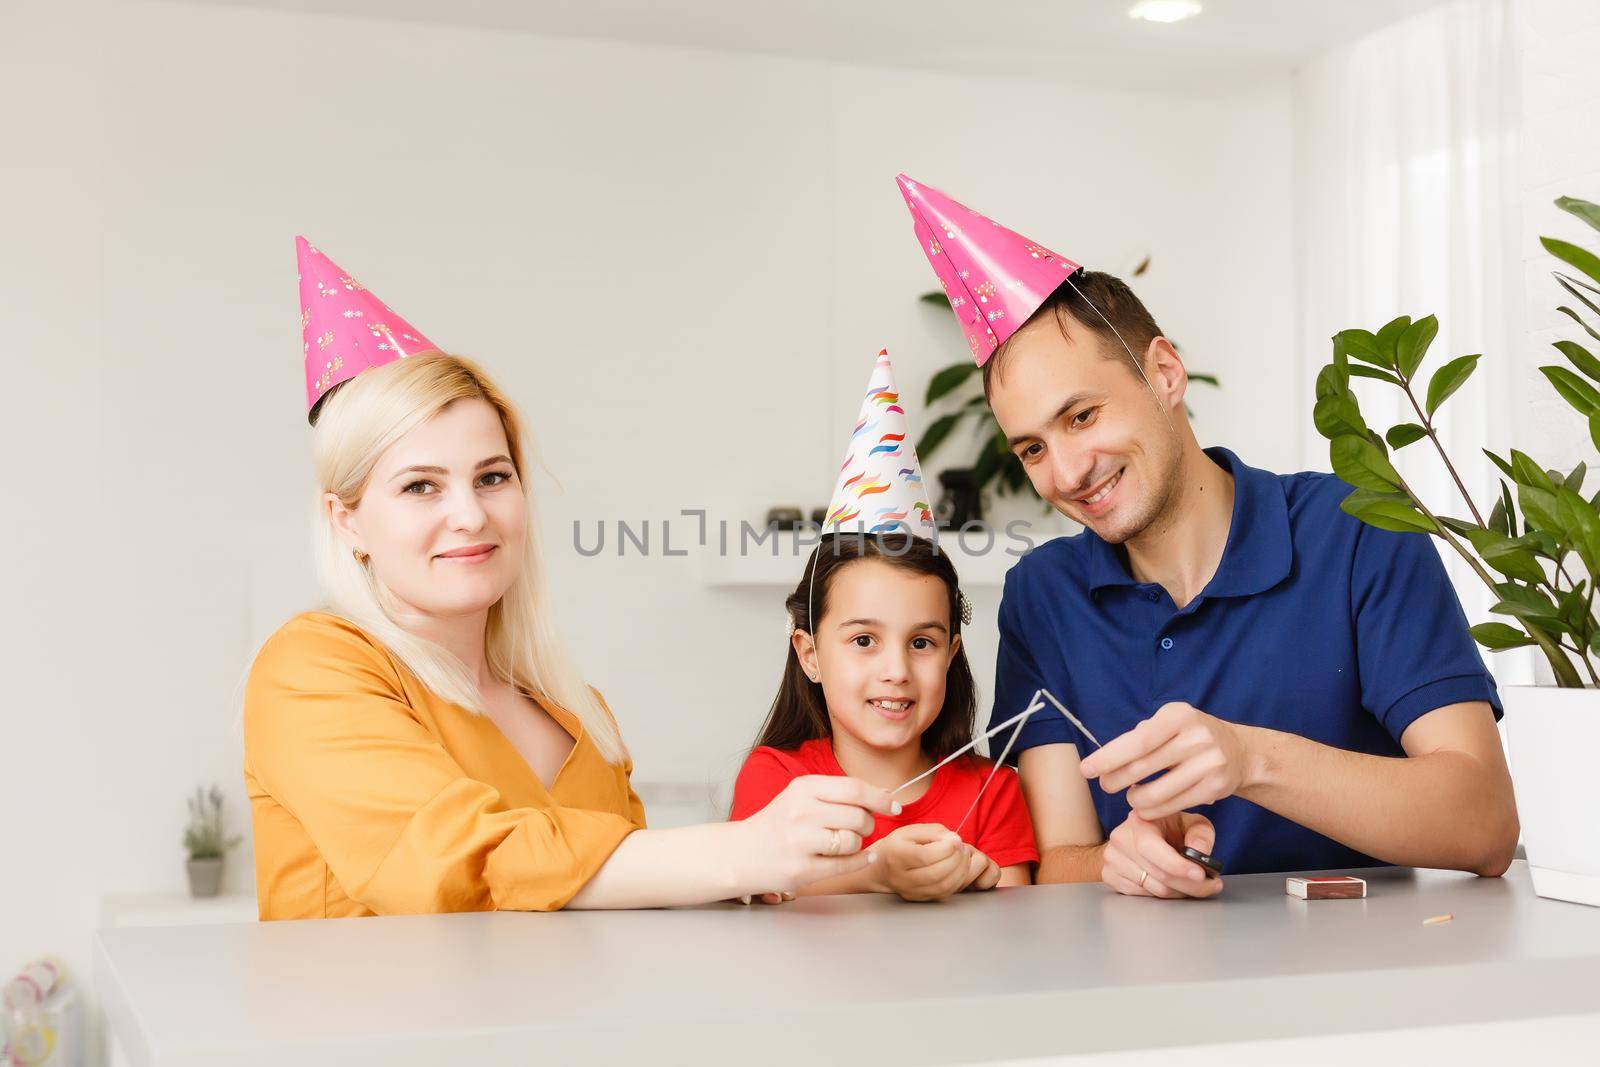 Happy family celebrating birthday via internet in quarantine time, self-isolation and family values, online birthday party